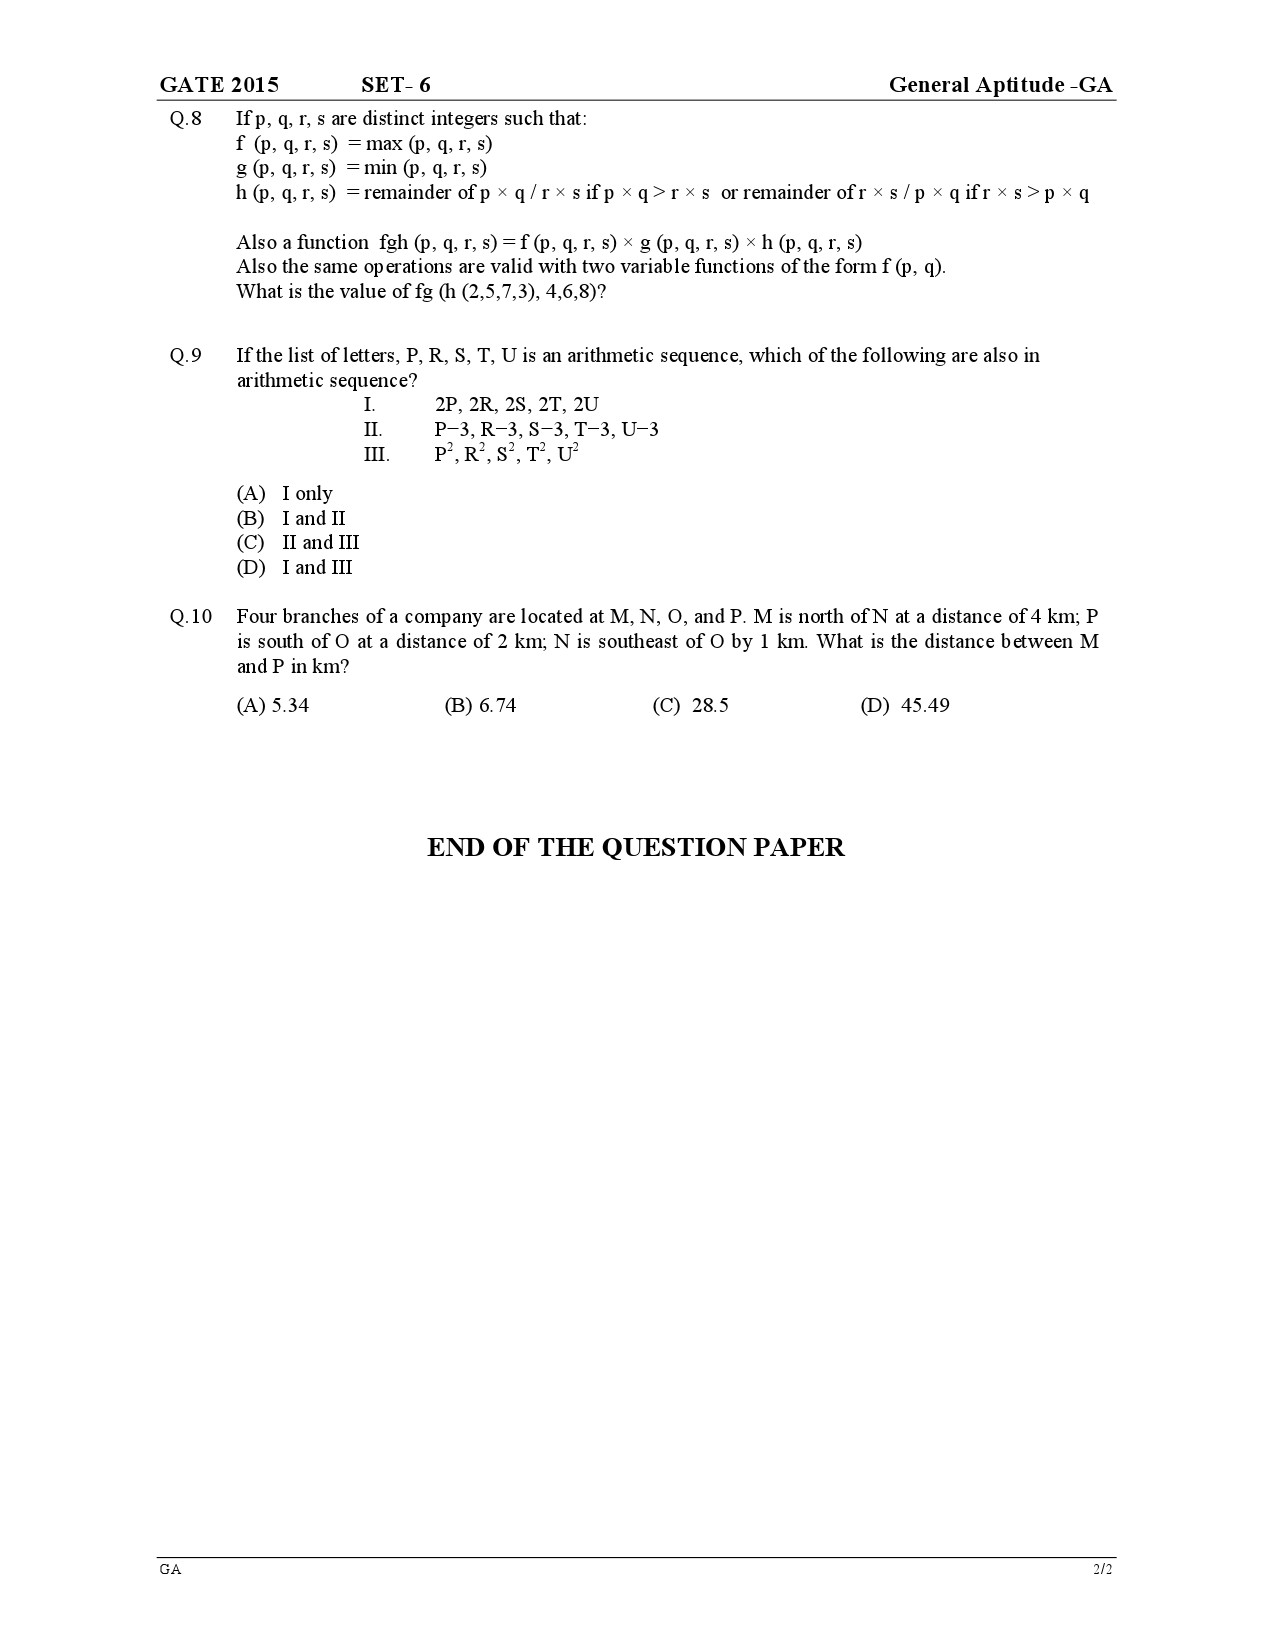 GATE Exam Question Paper 2015 General Aptitude 13